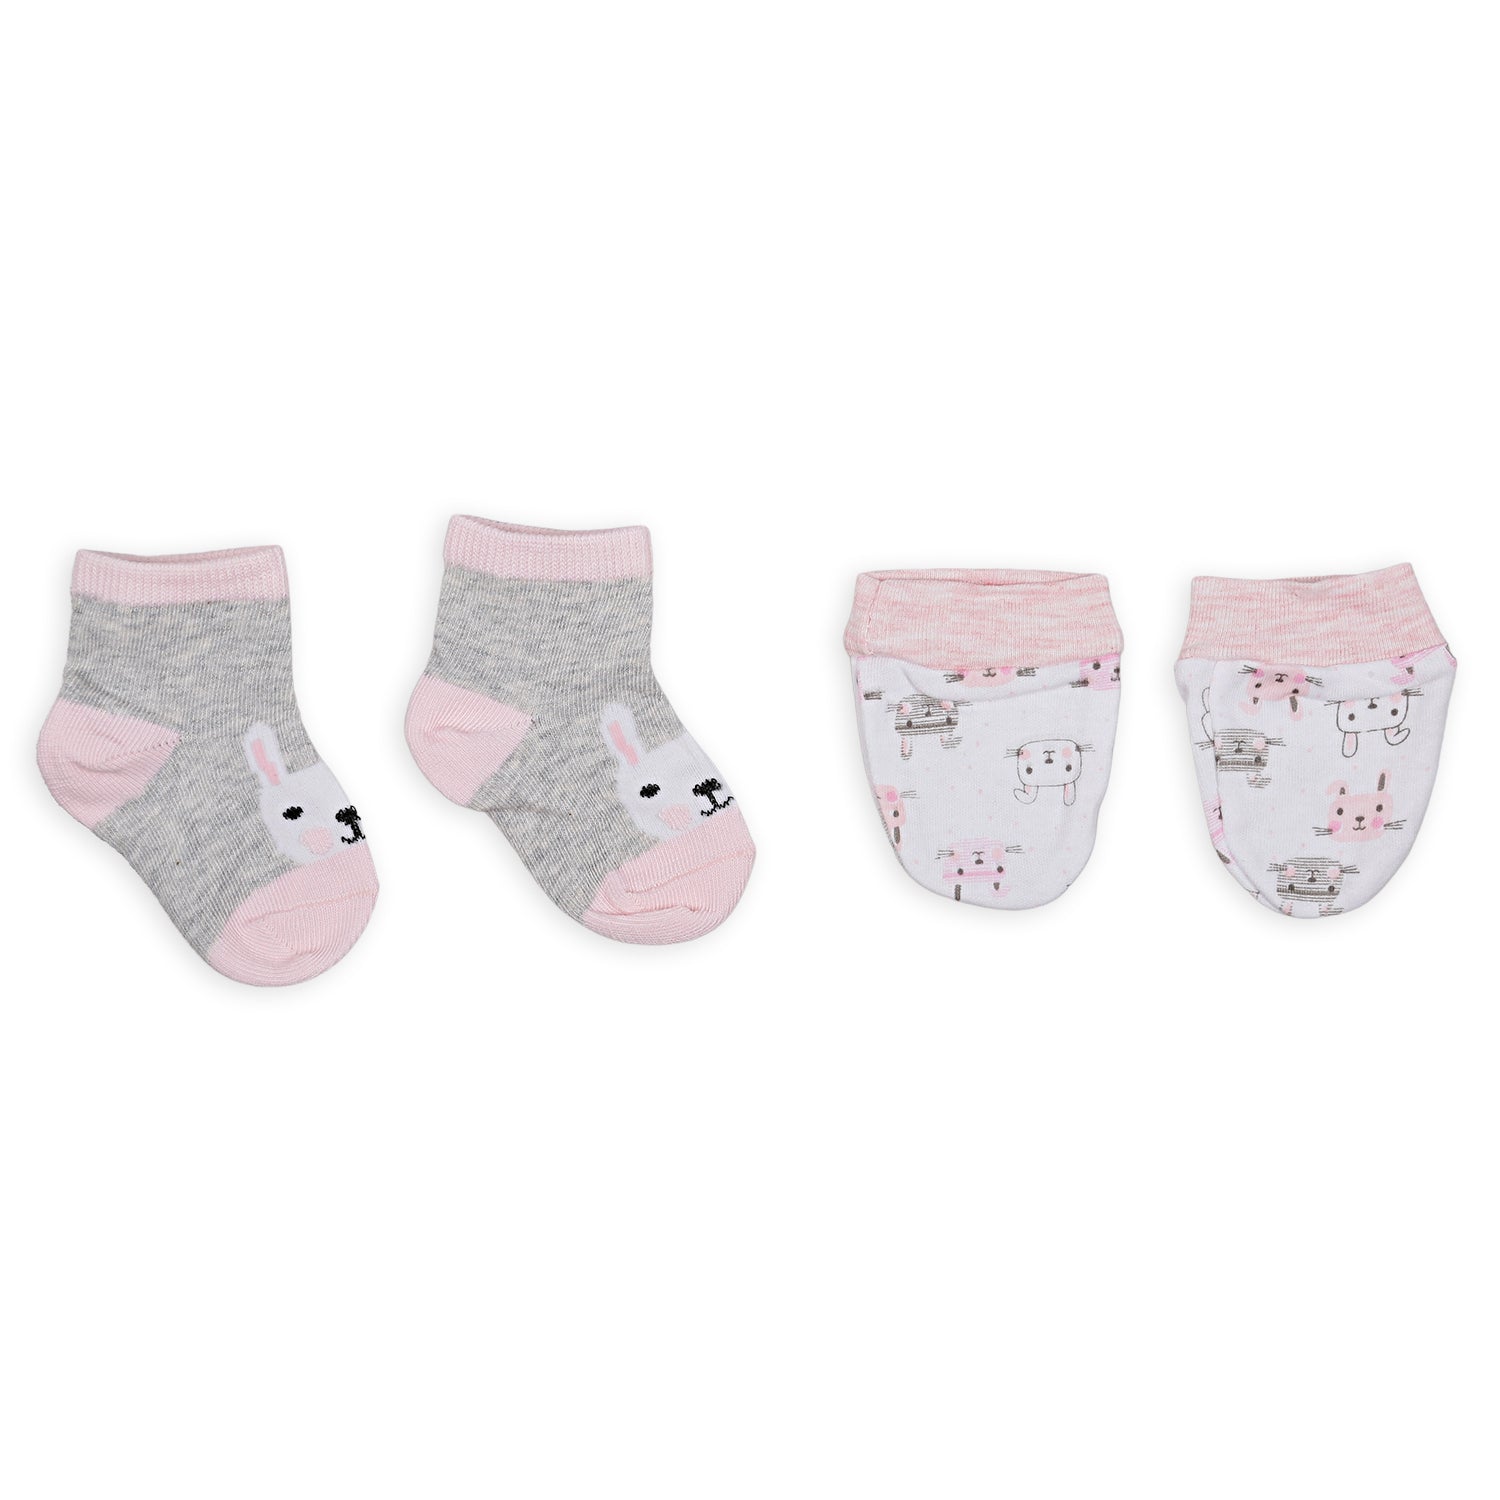 Feeding Bibs Socks And Mittens Set Of 3 Rabbit Printed Peach - Baby Moo